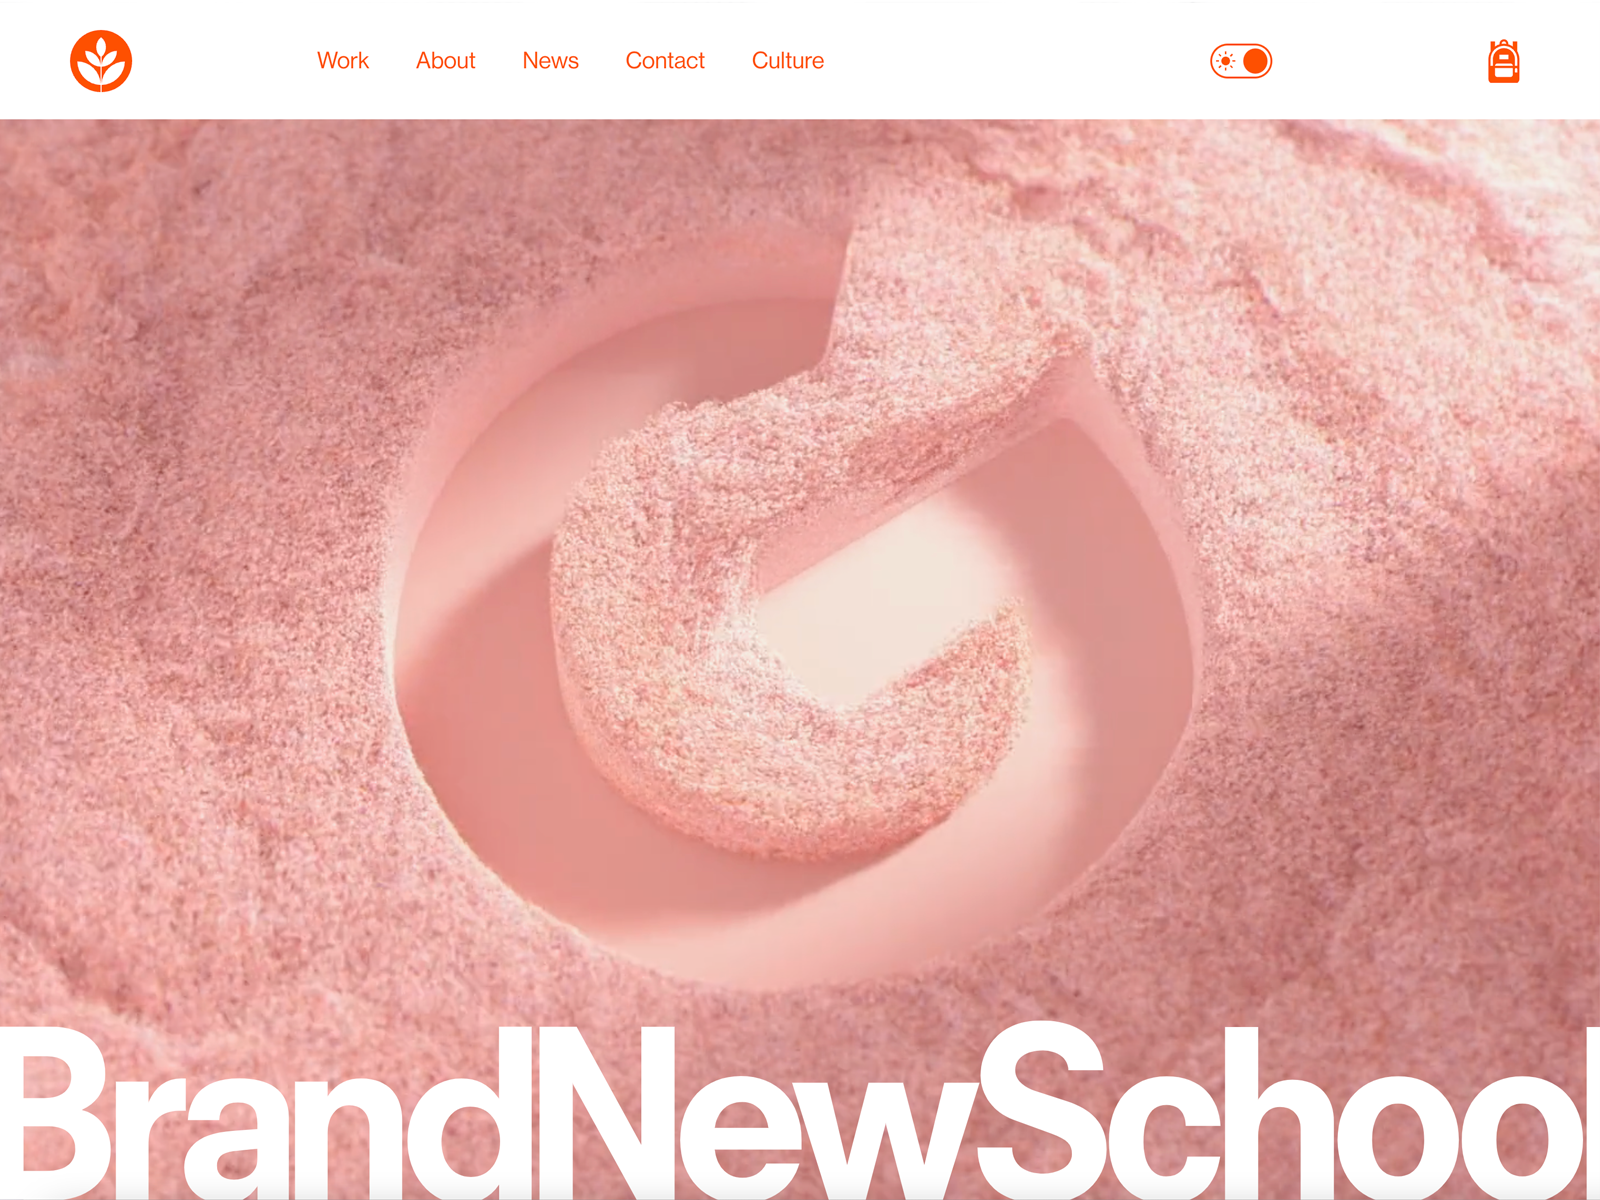 BrandNewSchool.com receives a feature on Awwwards